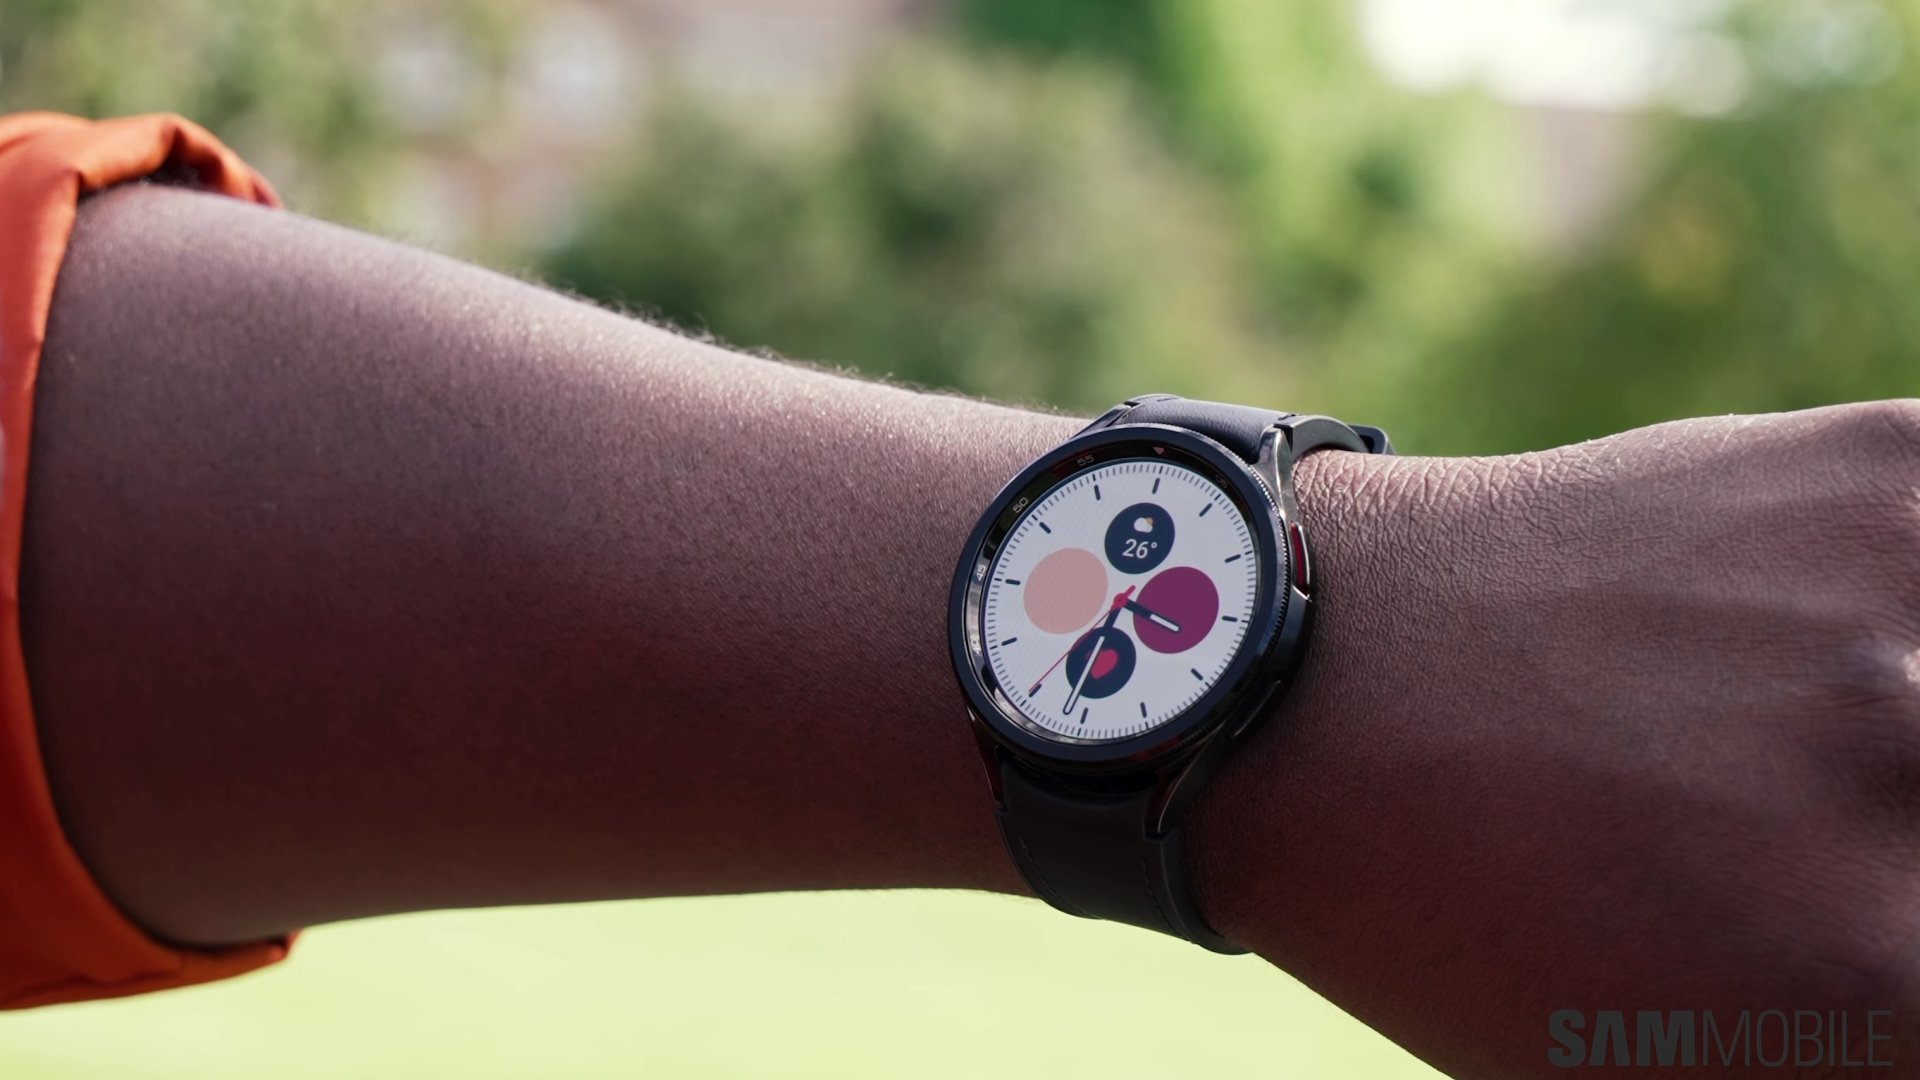 Buy SAMSUNG Galaxy Watch6 Classic BT with Bixby - Black, 47 mm